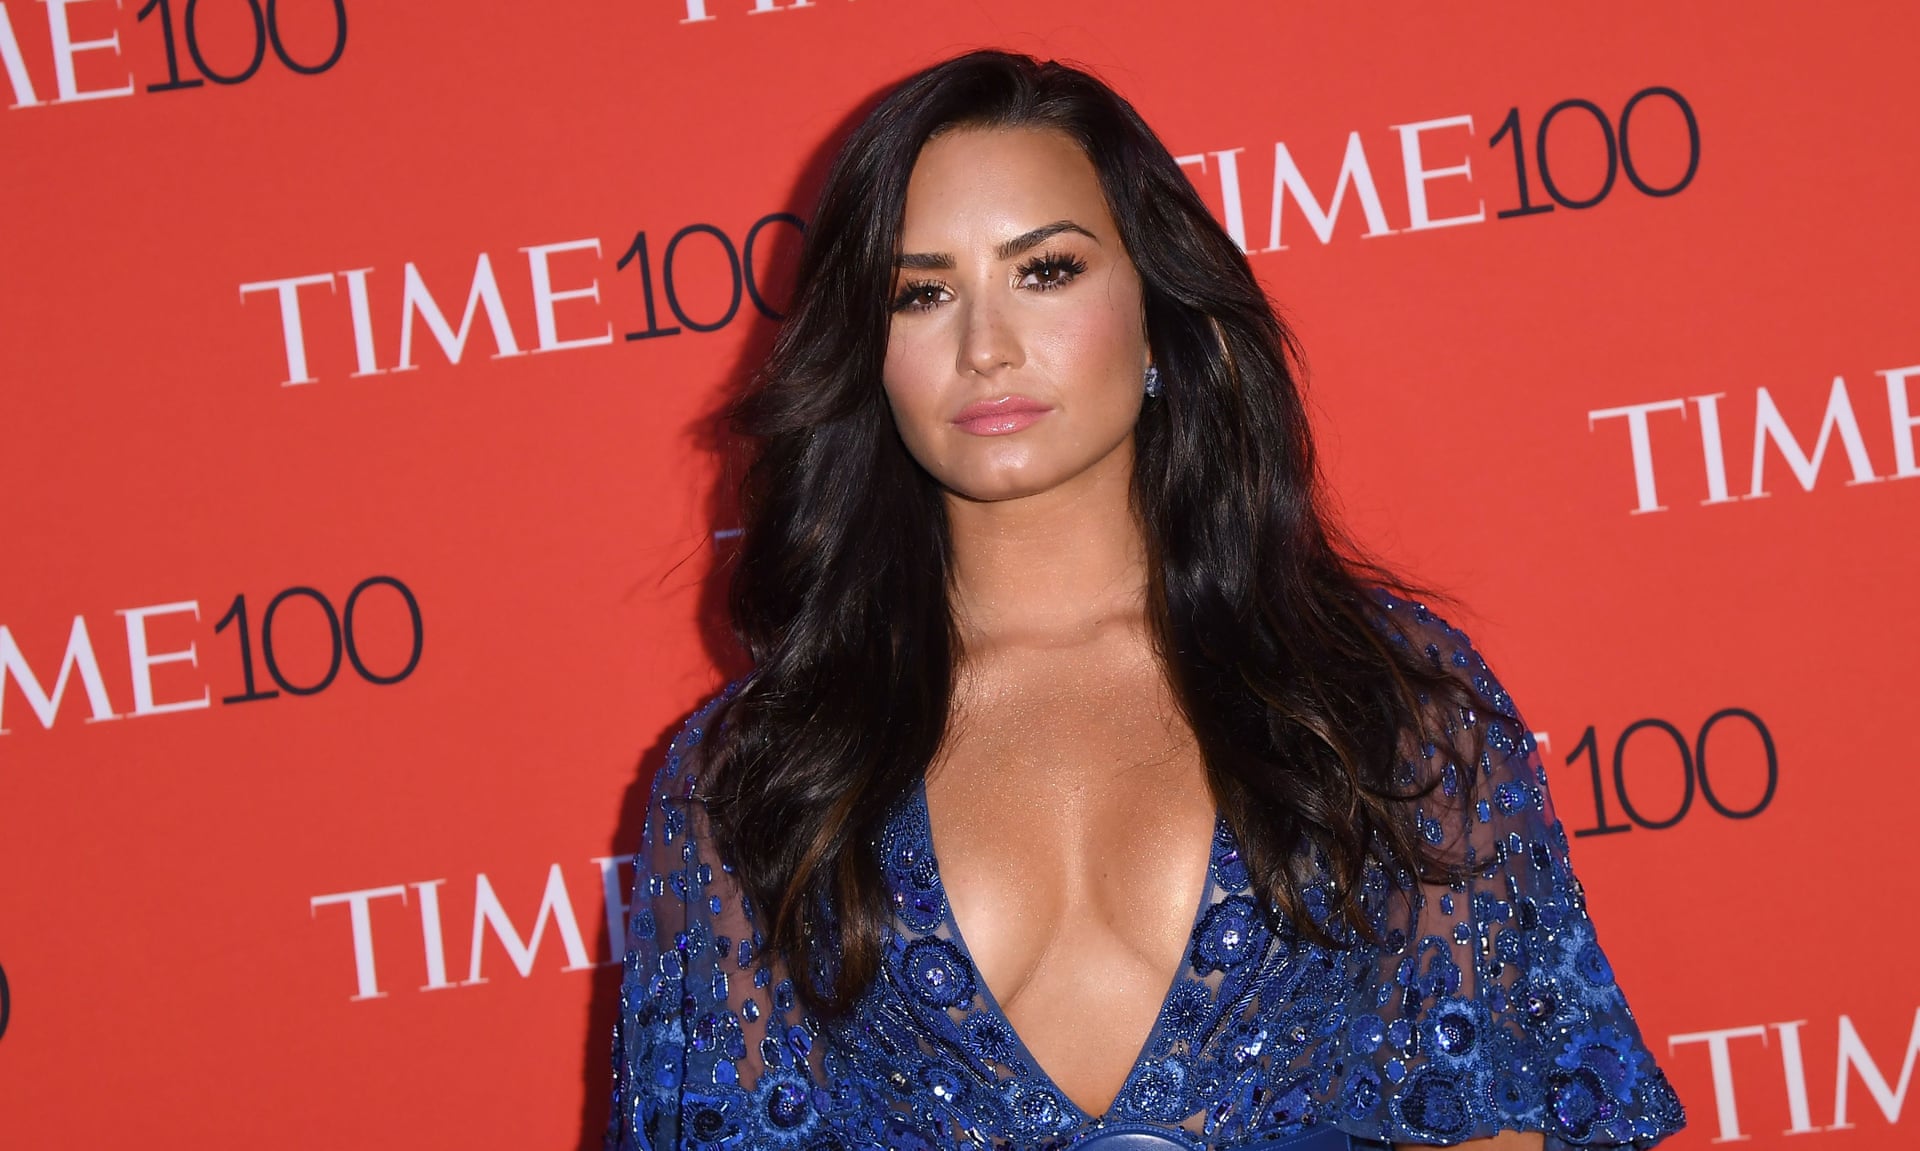 Demi Lovato awake in hospital after reported drug overdose